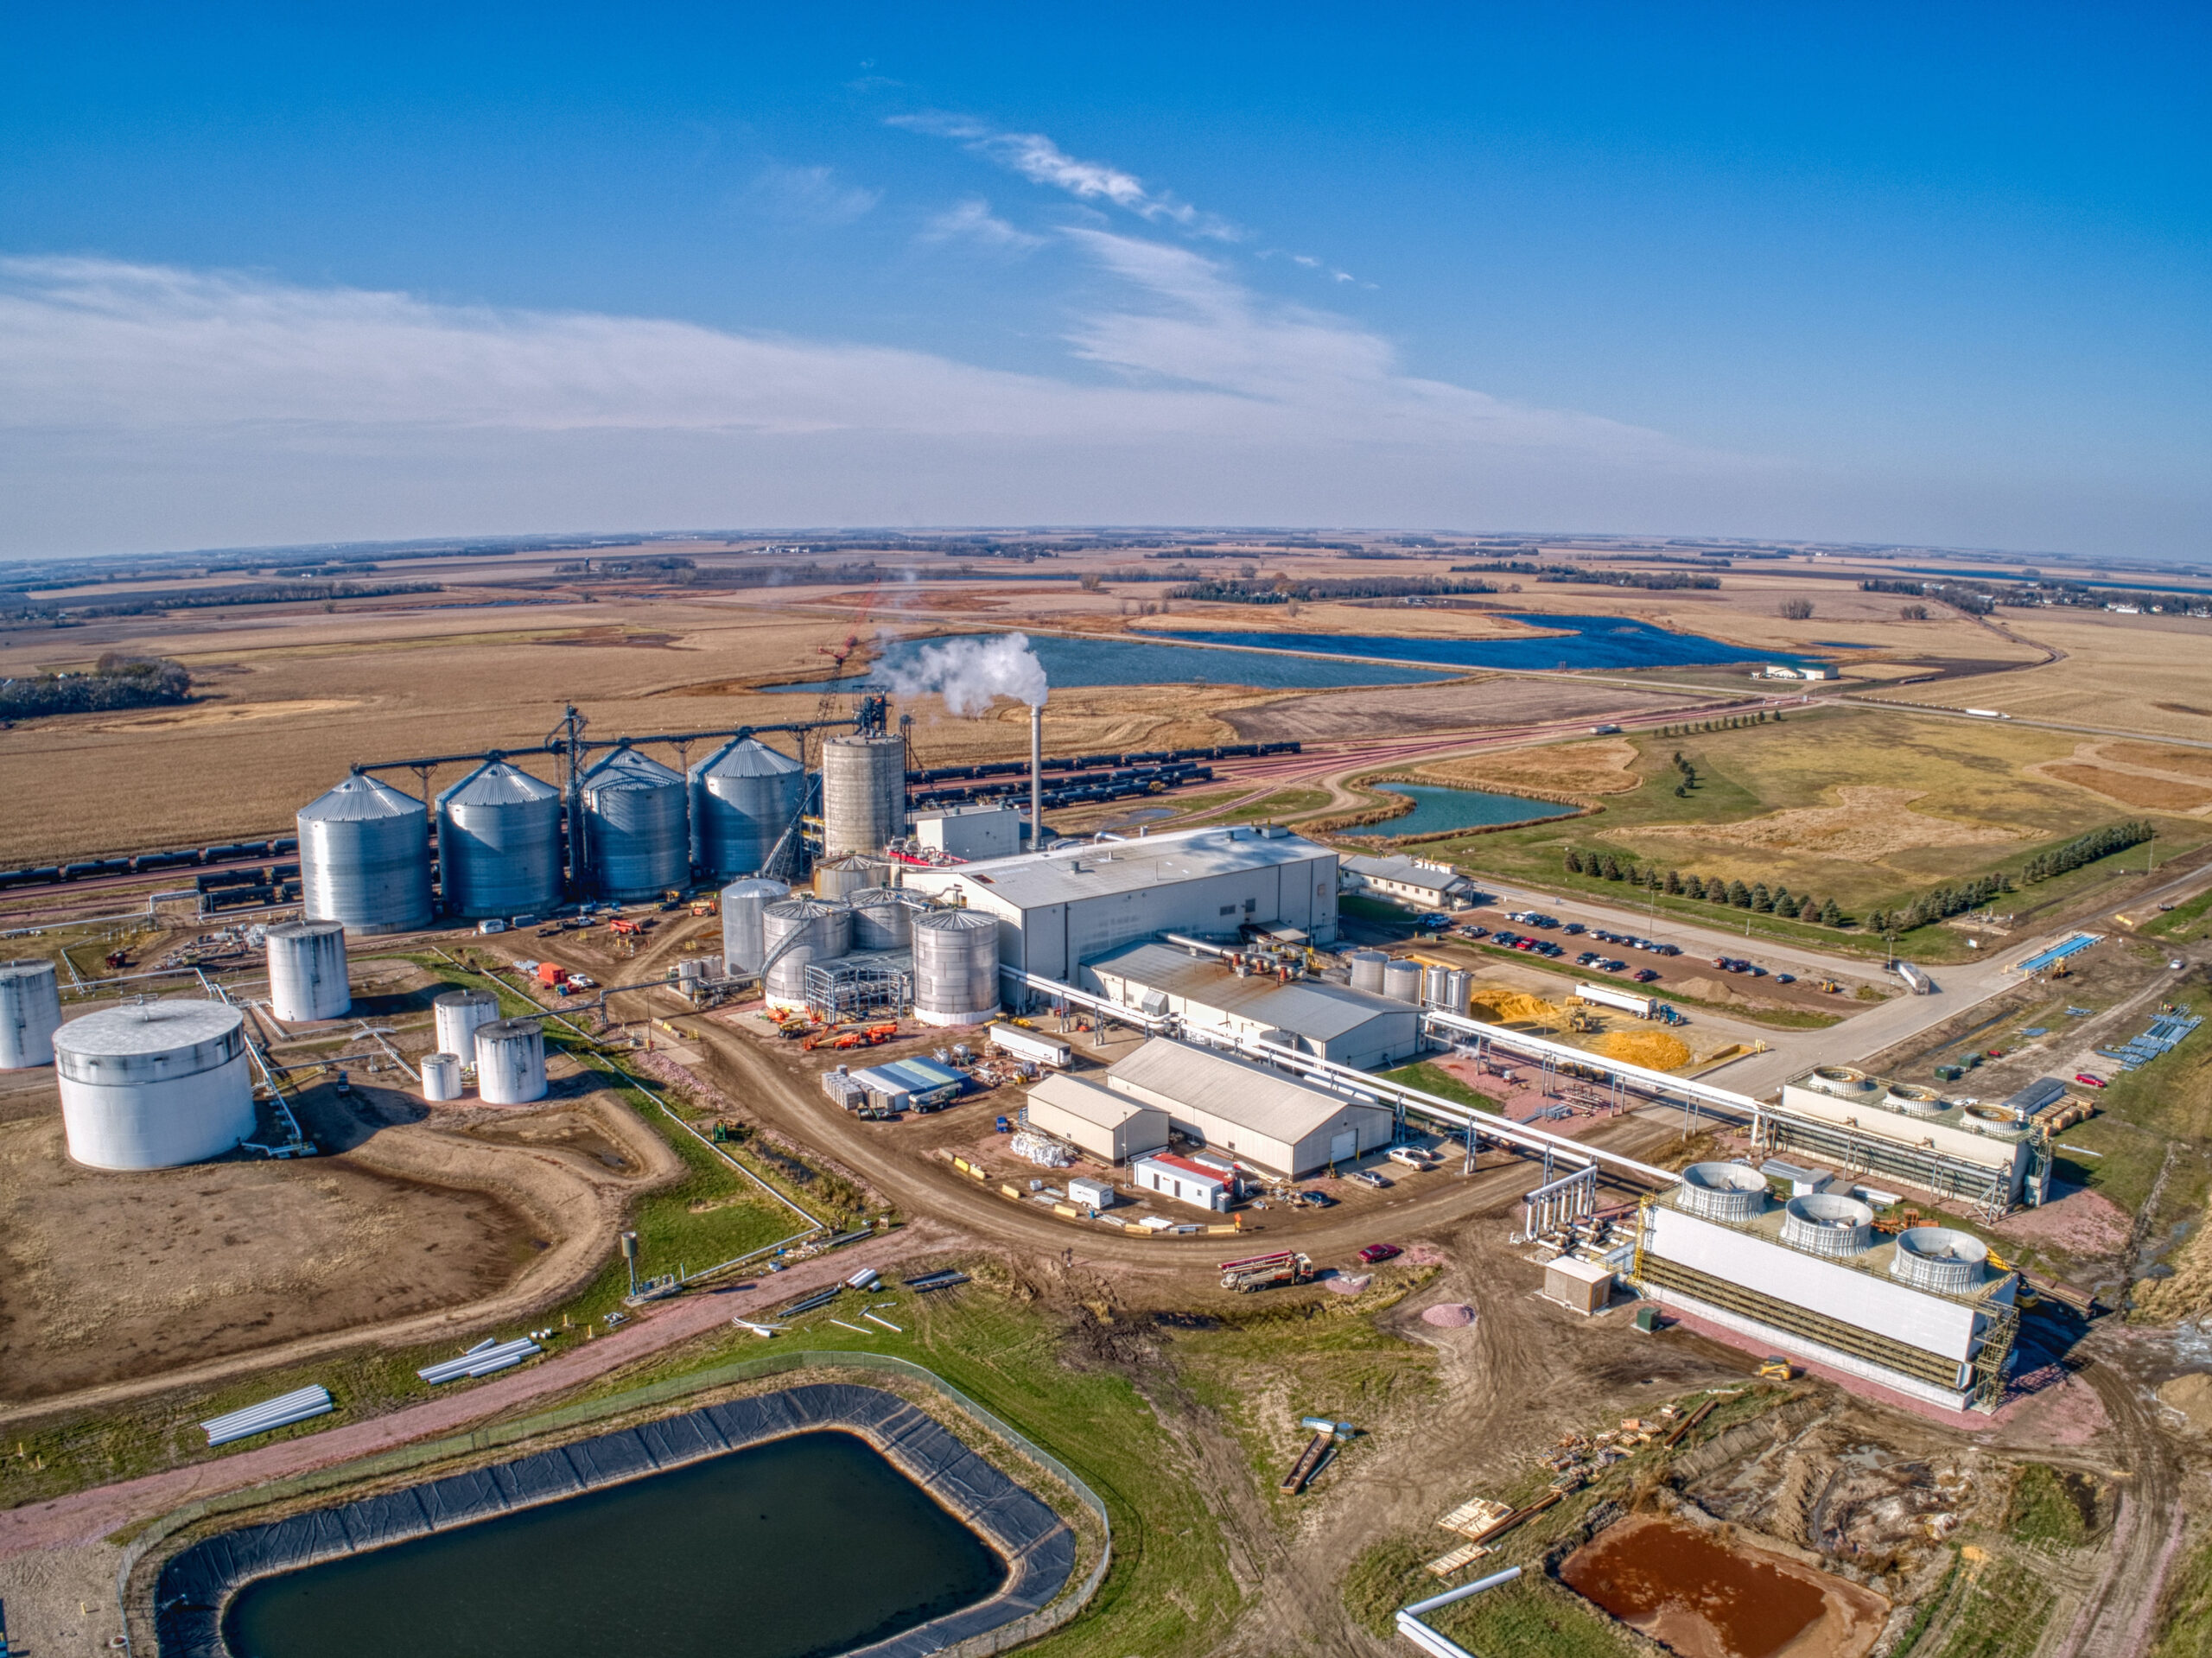 Image of an ethanol plant/manufacturer